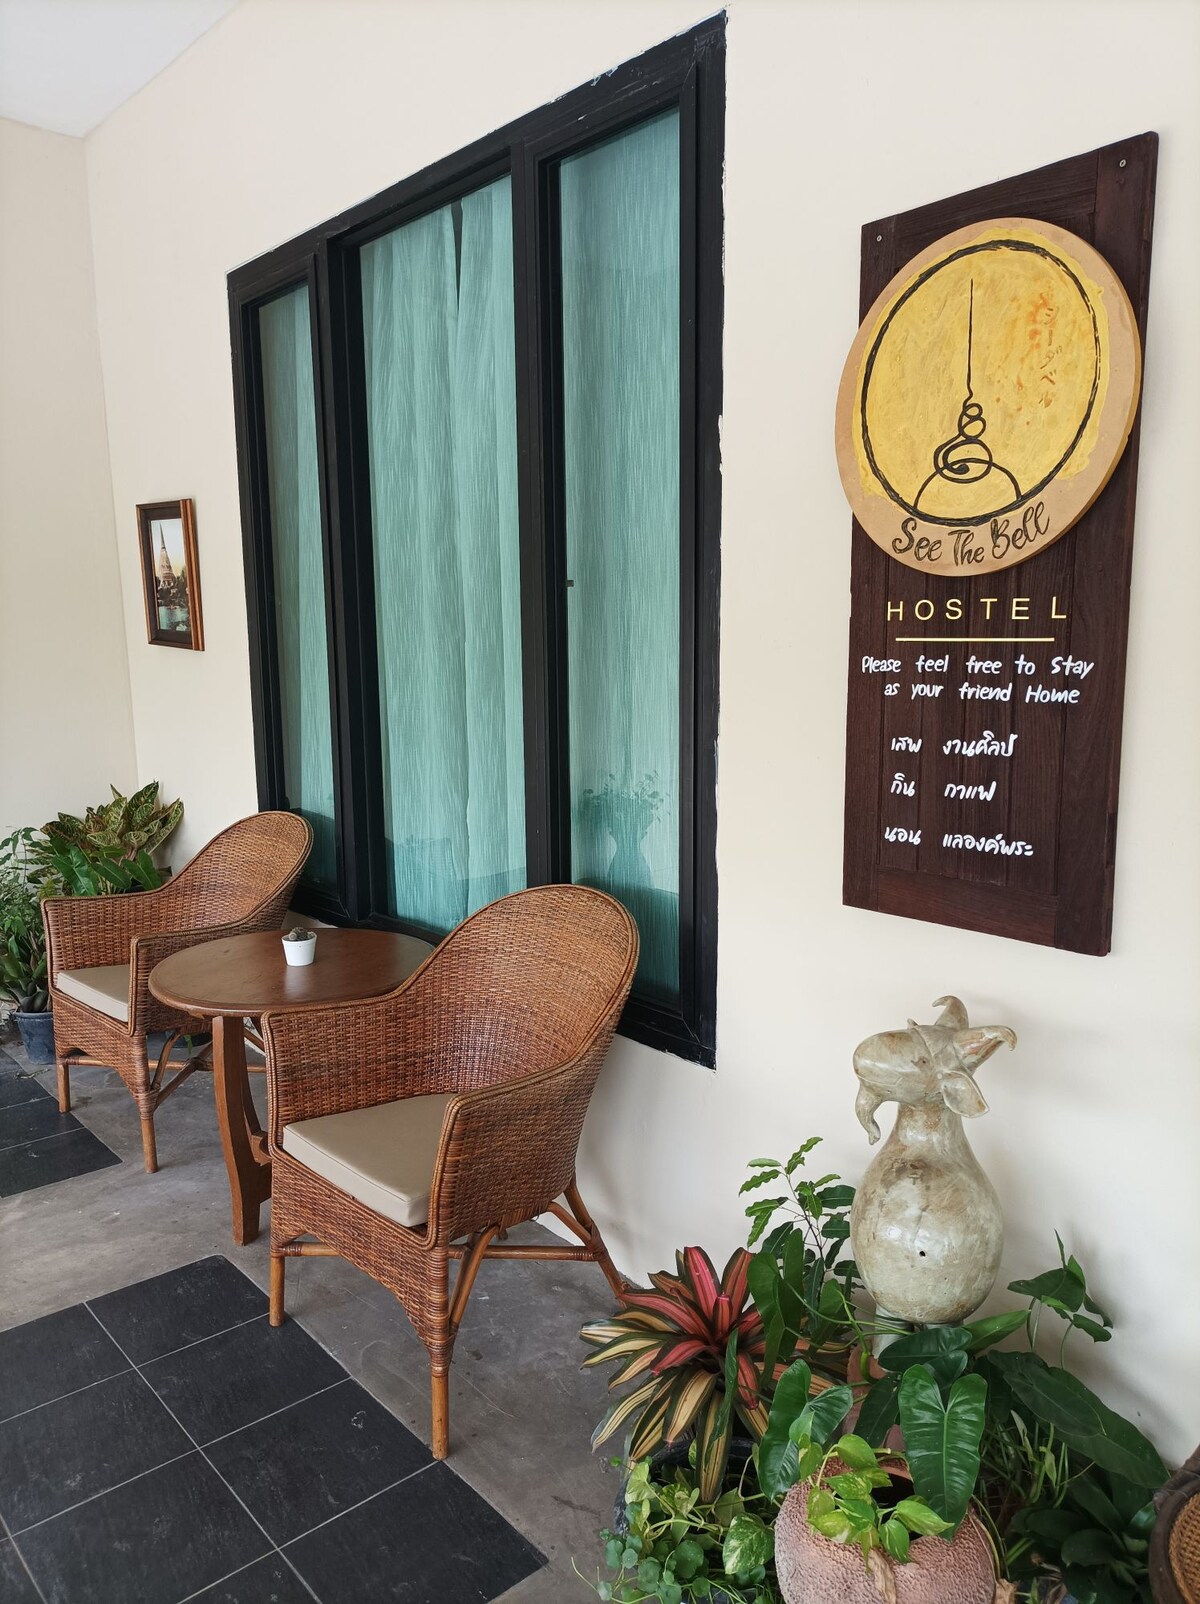 SeeTheBell旅舍
位于Phra Nakhon Pathom的中心。